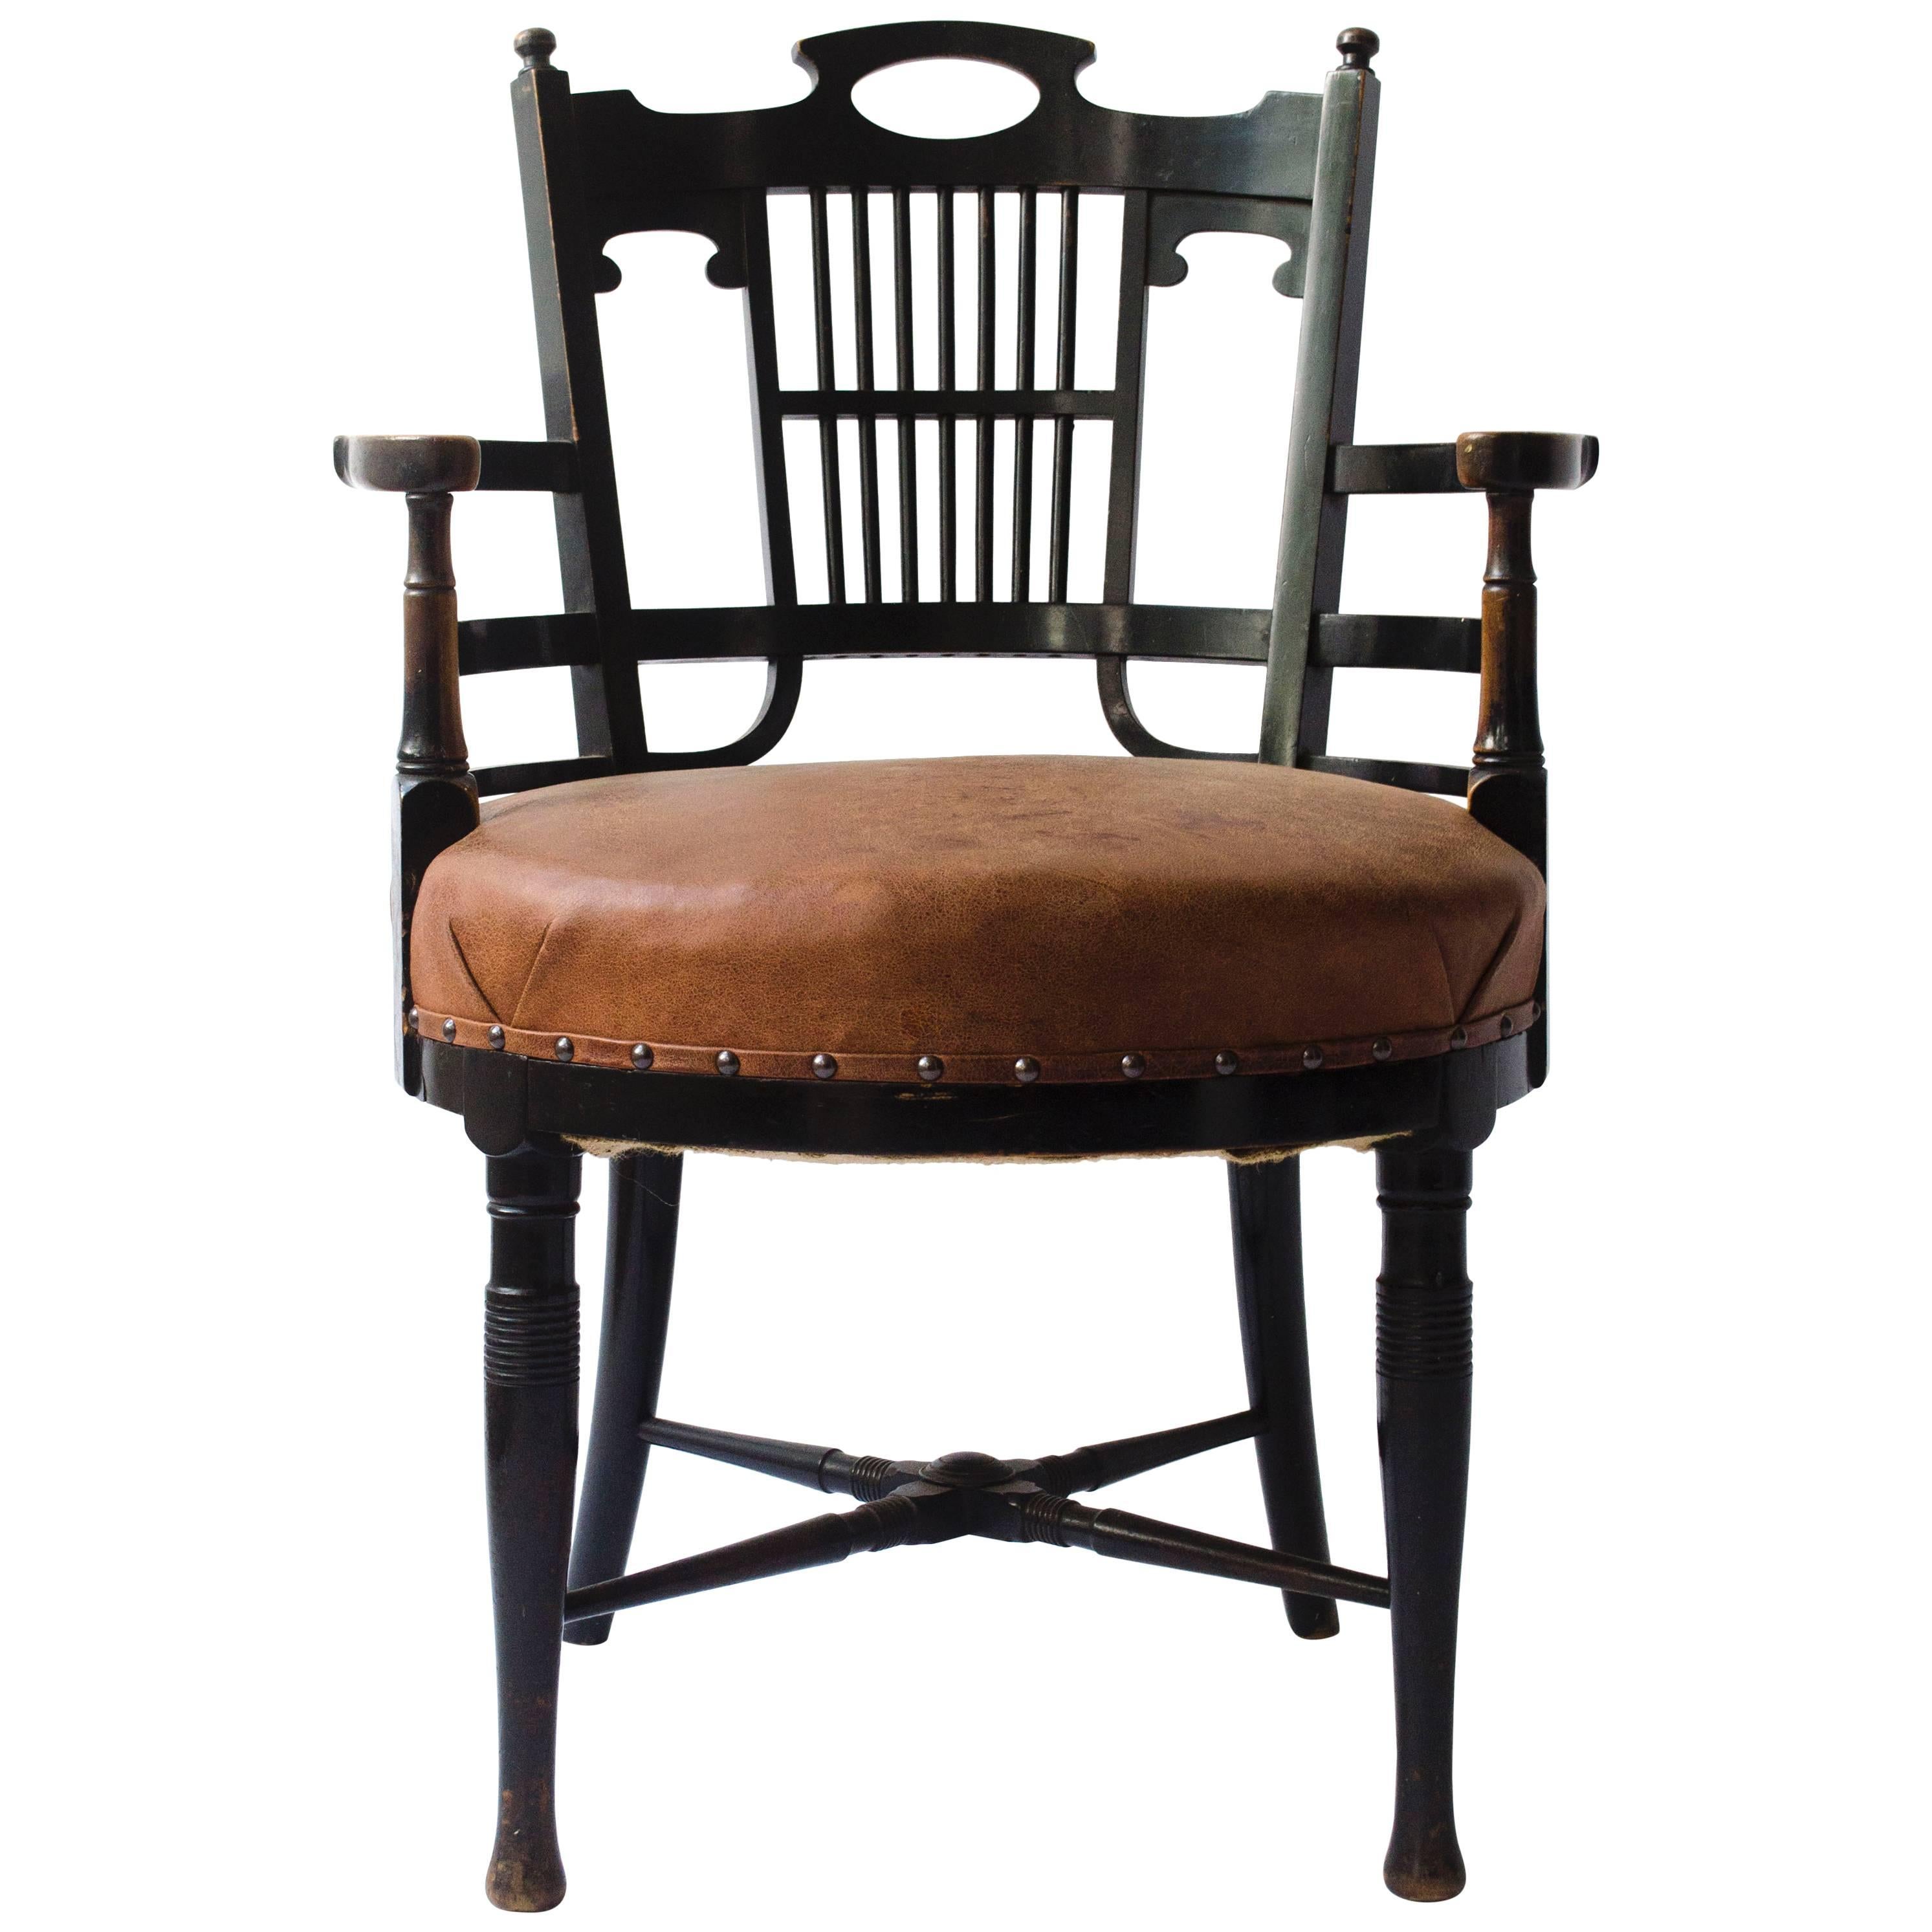 E W Godwin style of, An Anglo-Japanese Old English or Jacobean Ebonized Armchair